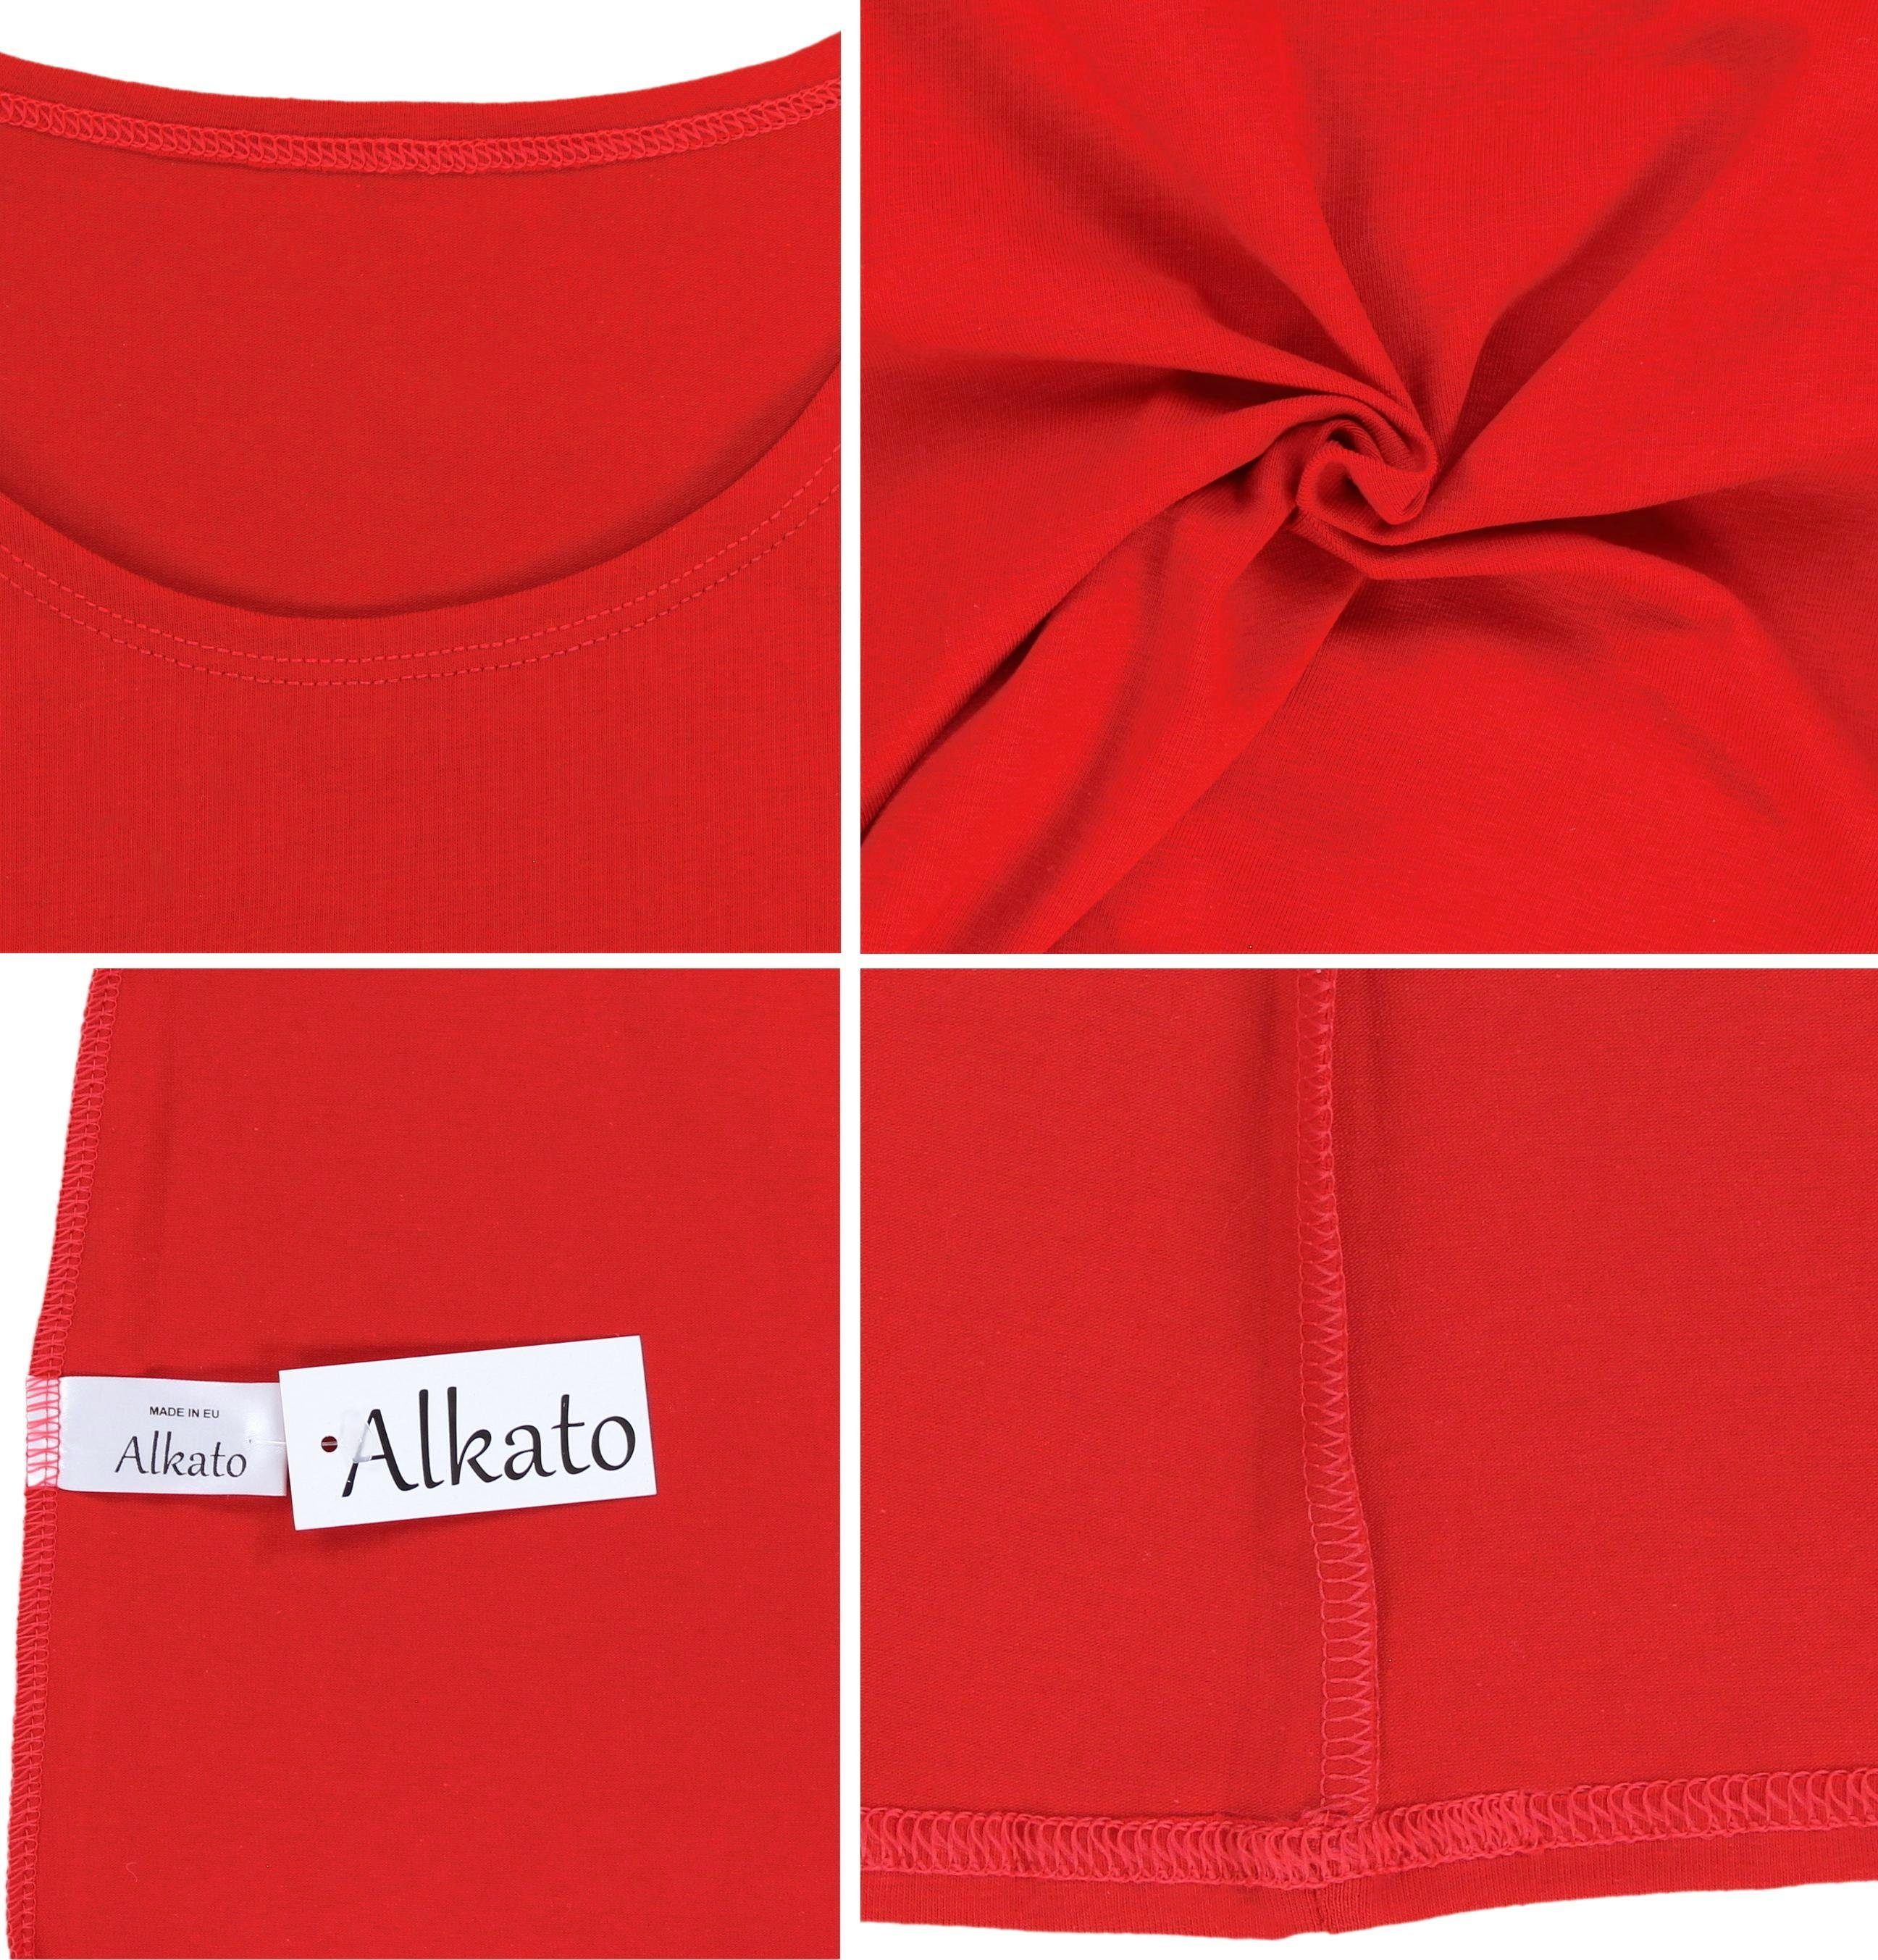 Alkato Longshirt Shirt 3/4 Arm Rundhals Rot Damen mit Alkato